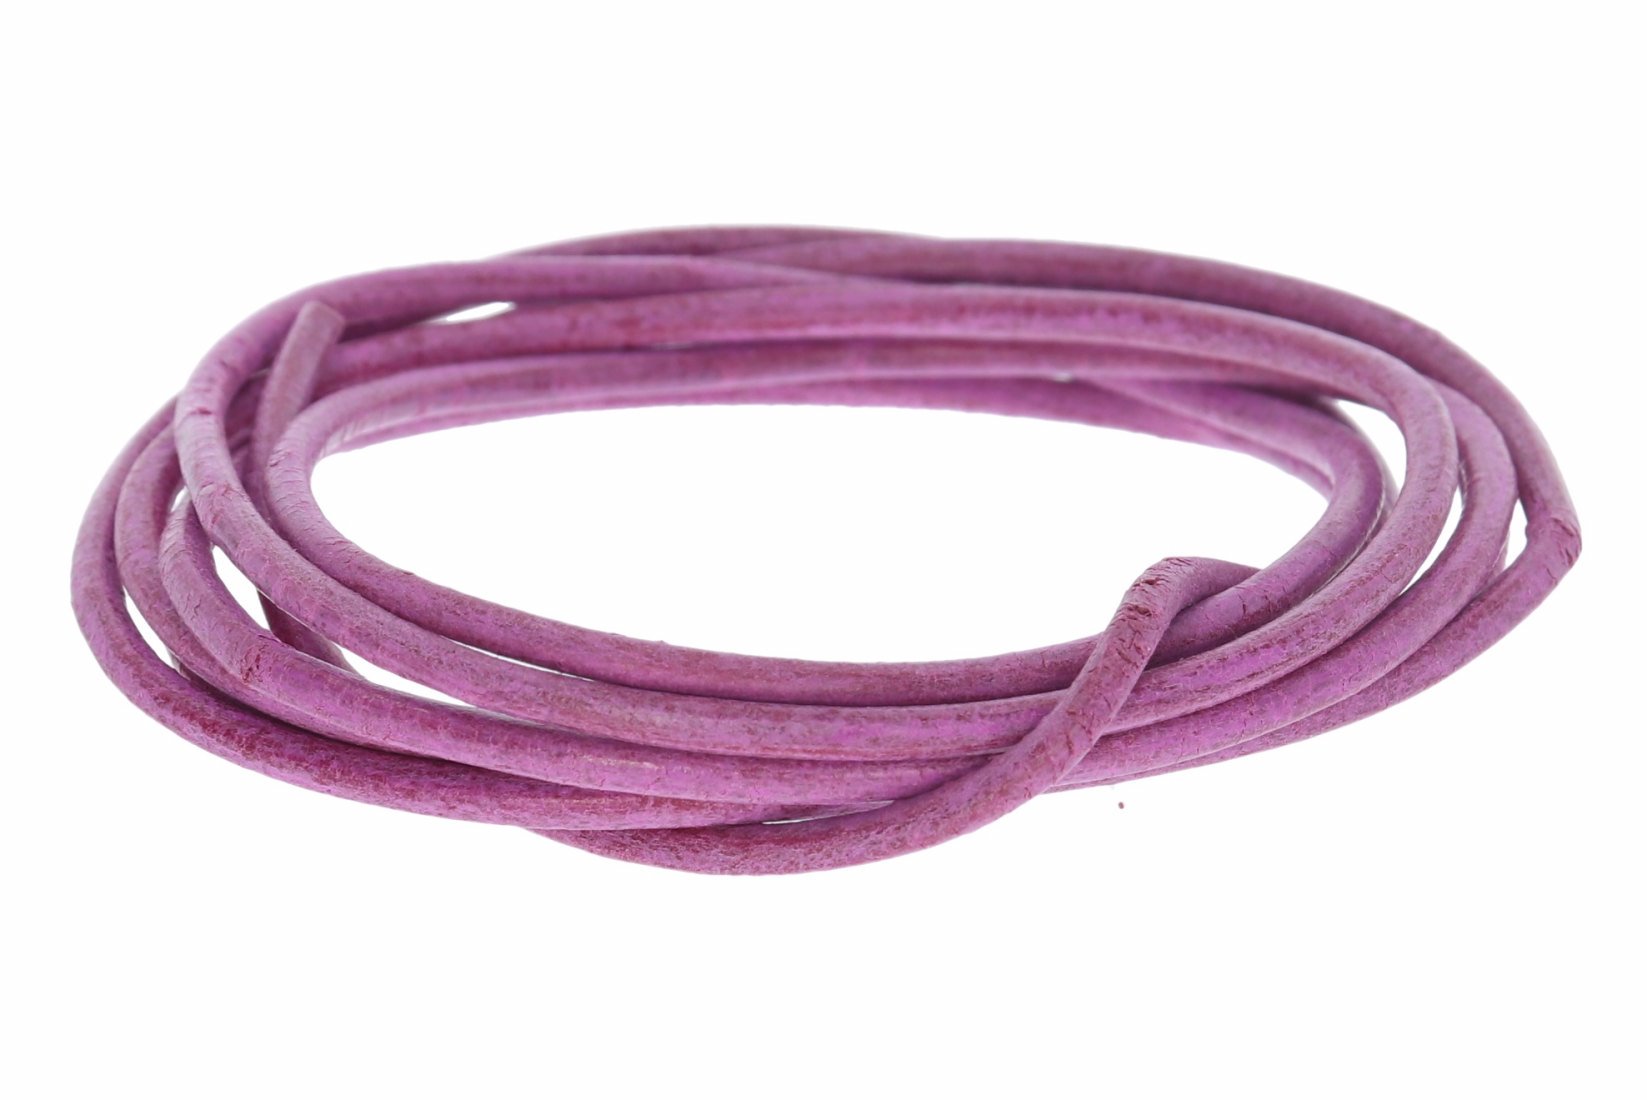 Lederband rosa  -  Lederbänder Lederriemen Lederschnur 2 mm Ø - 100cm L203